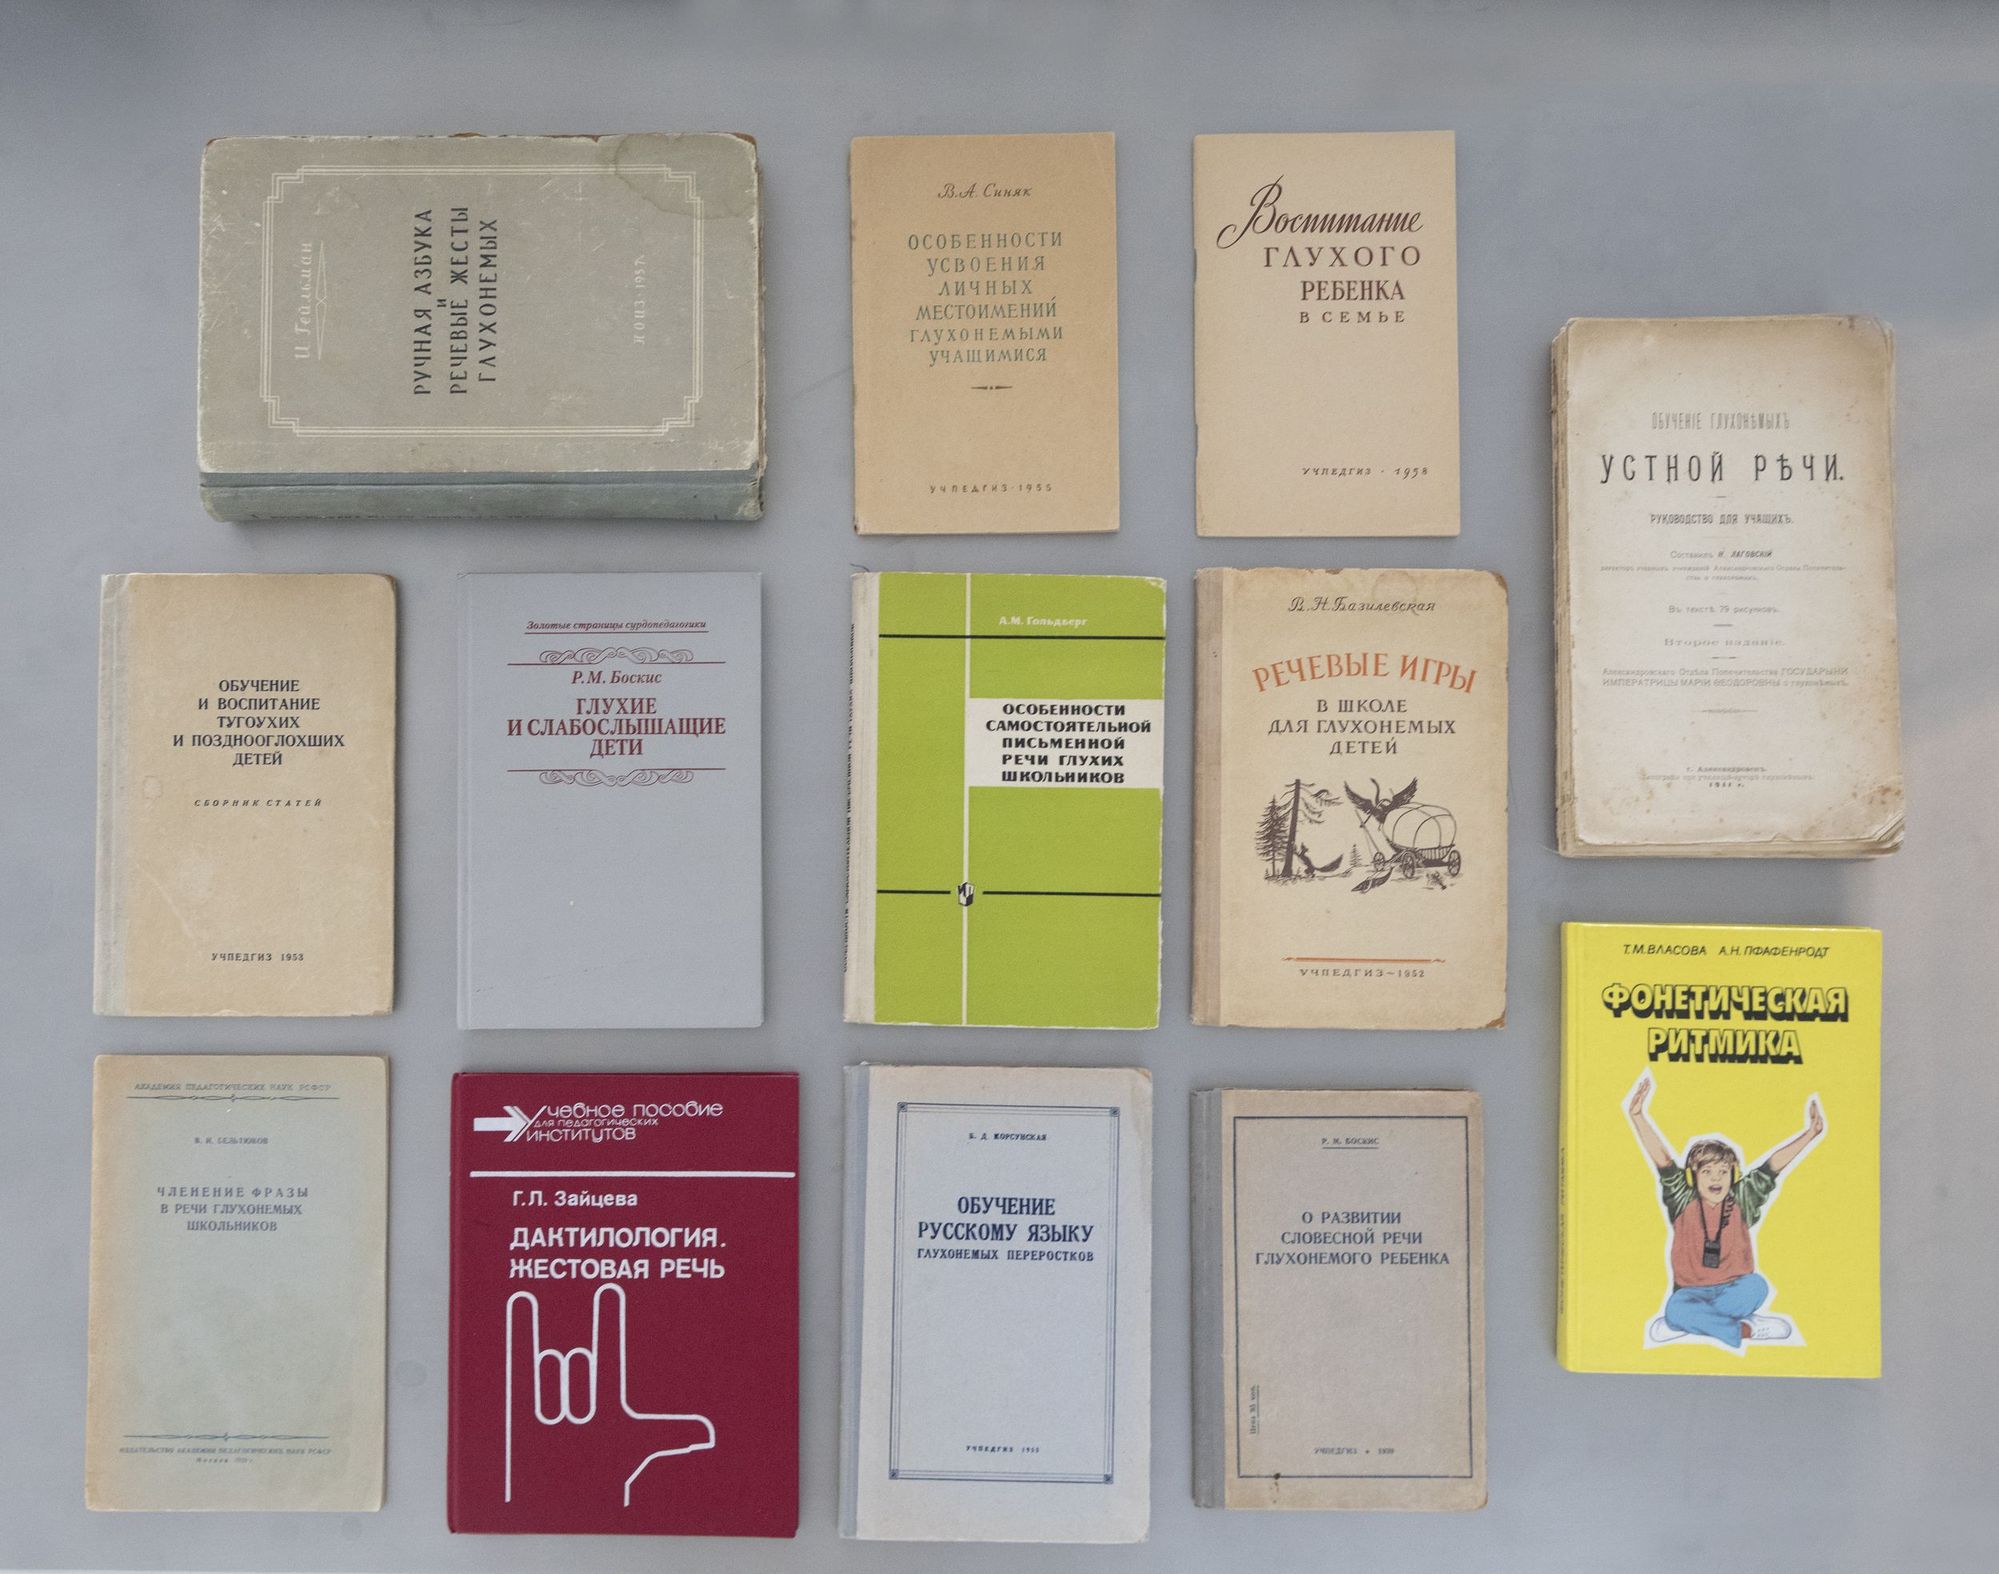 Фотография: на столе лежат 15 книг из подборки «Сурдопедагогика»